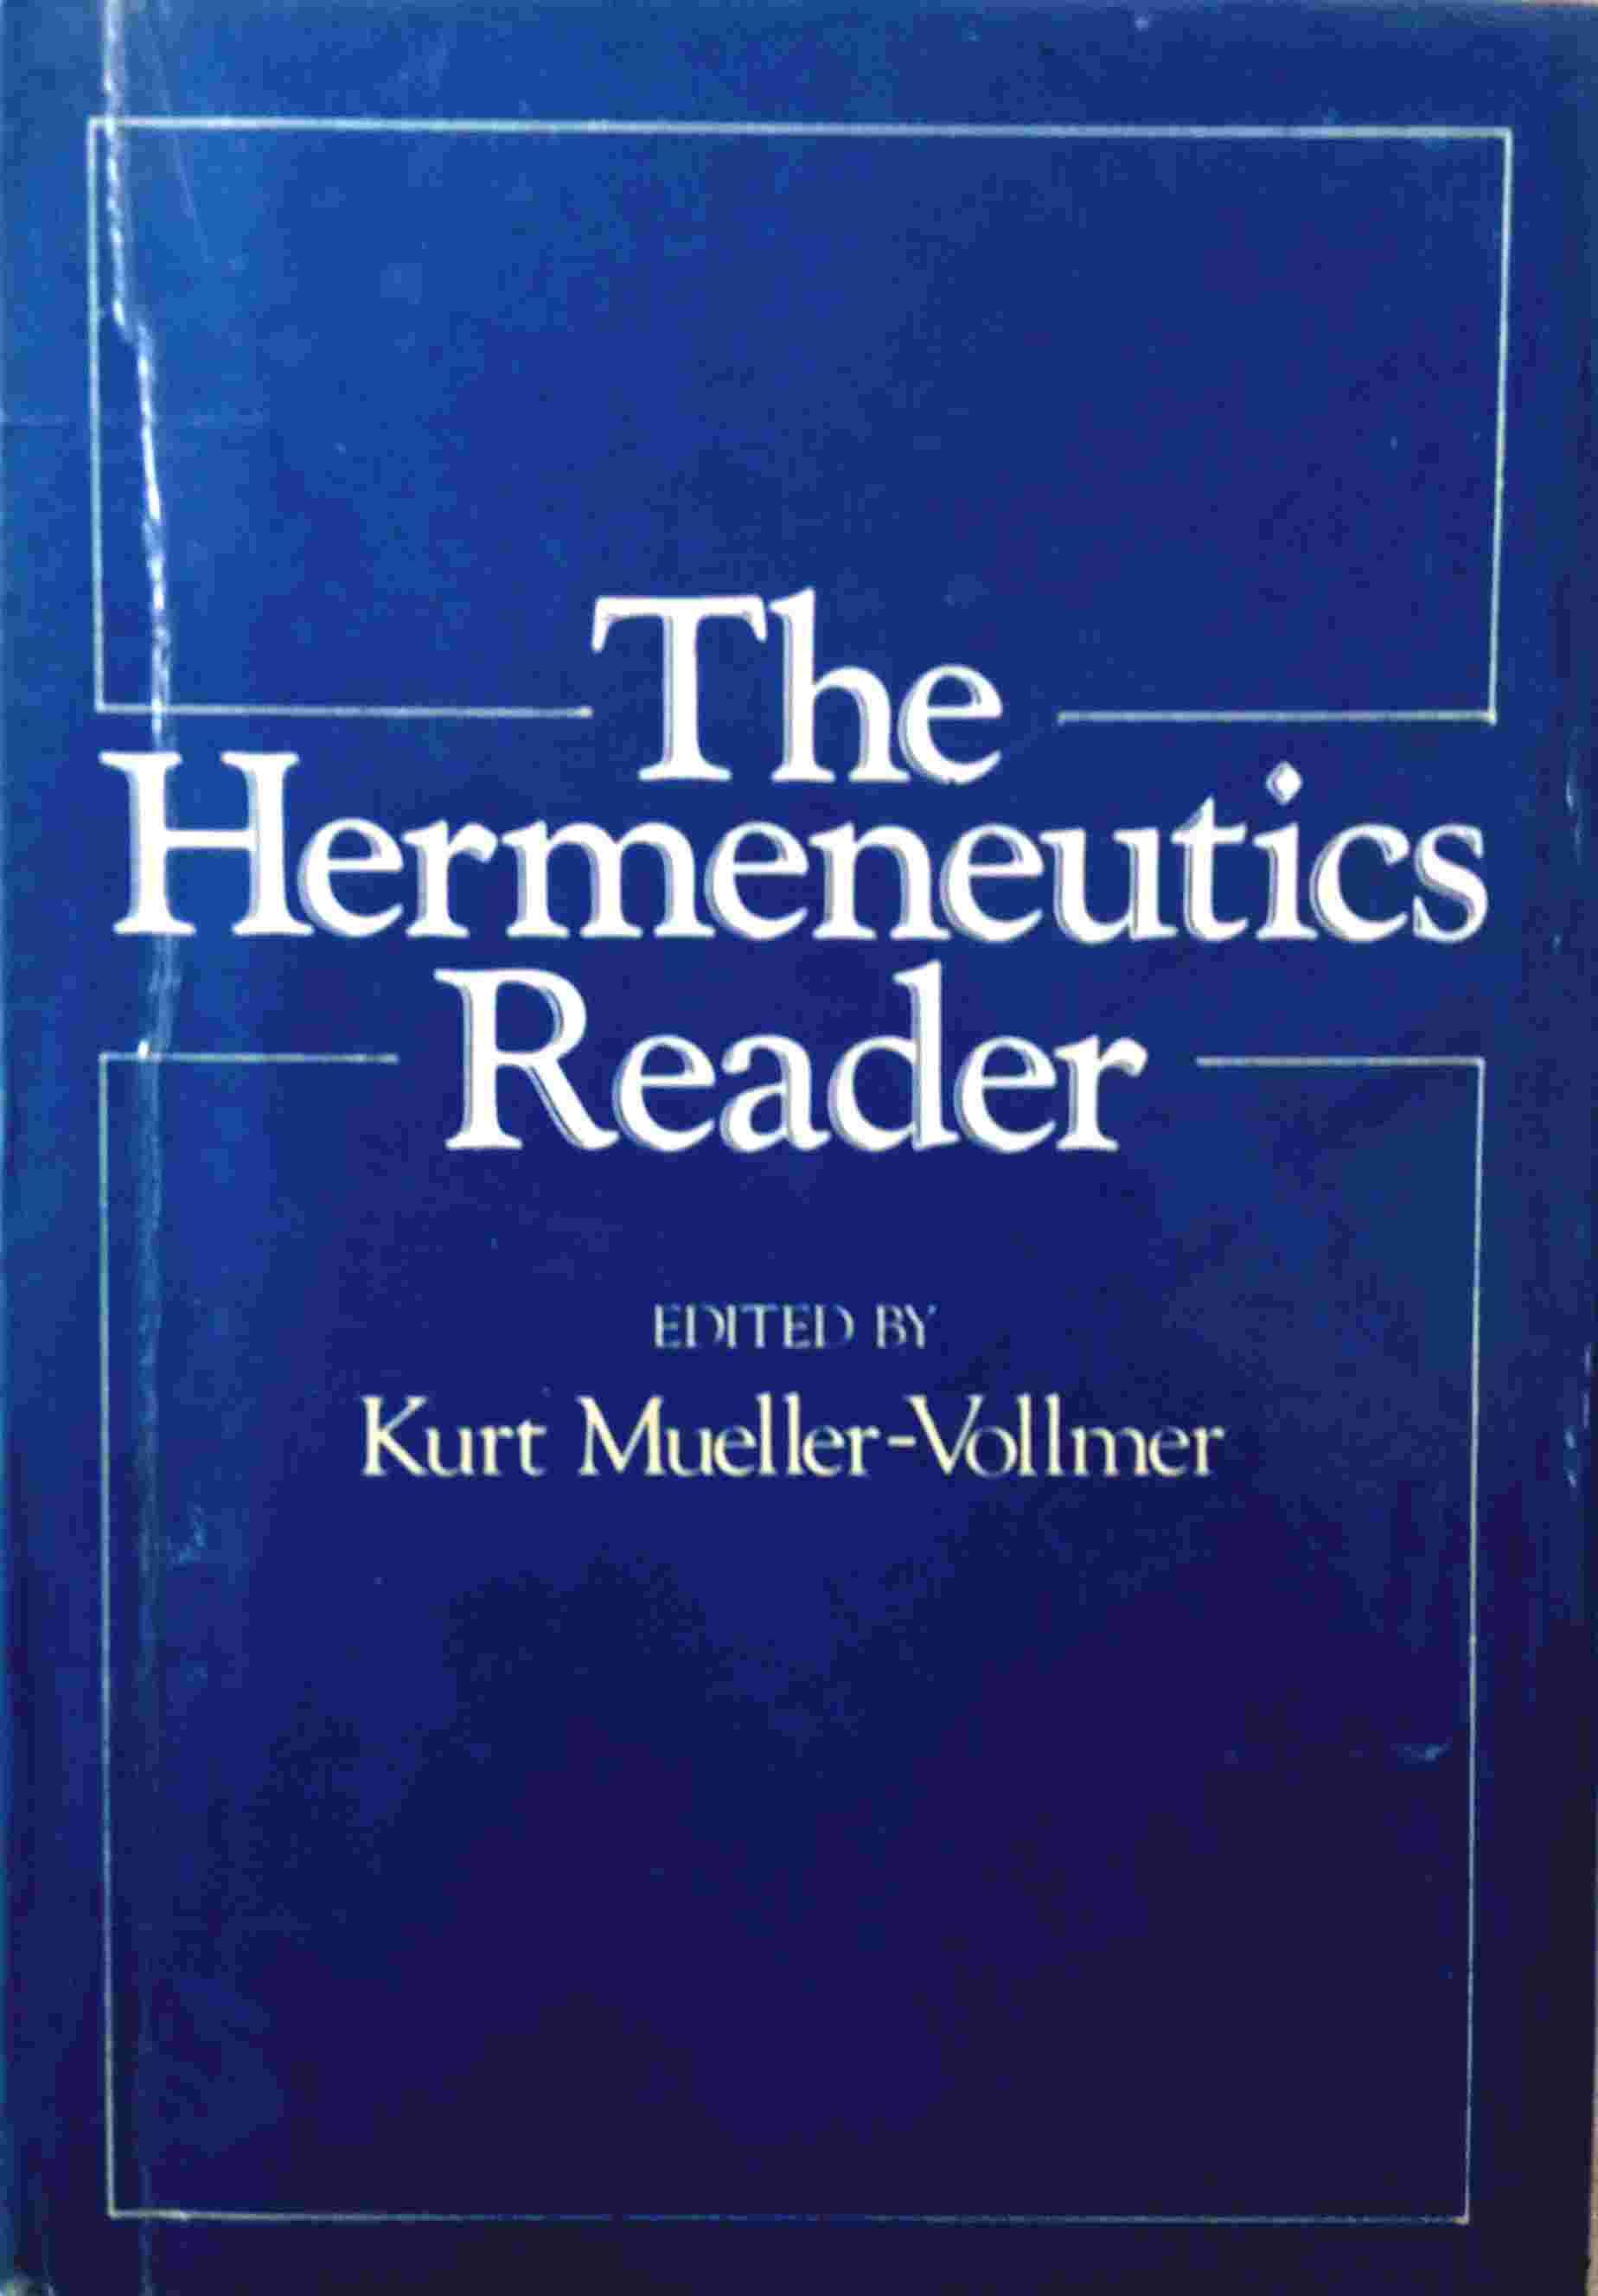 THE HERMENEUTICS READER